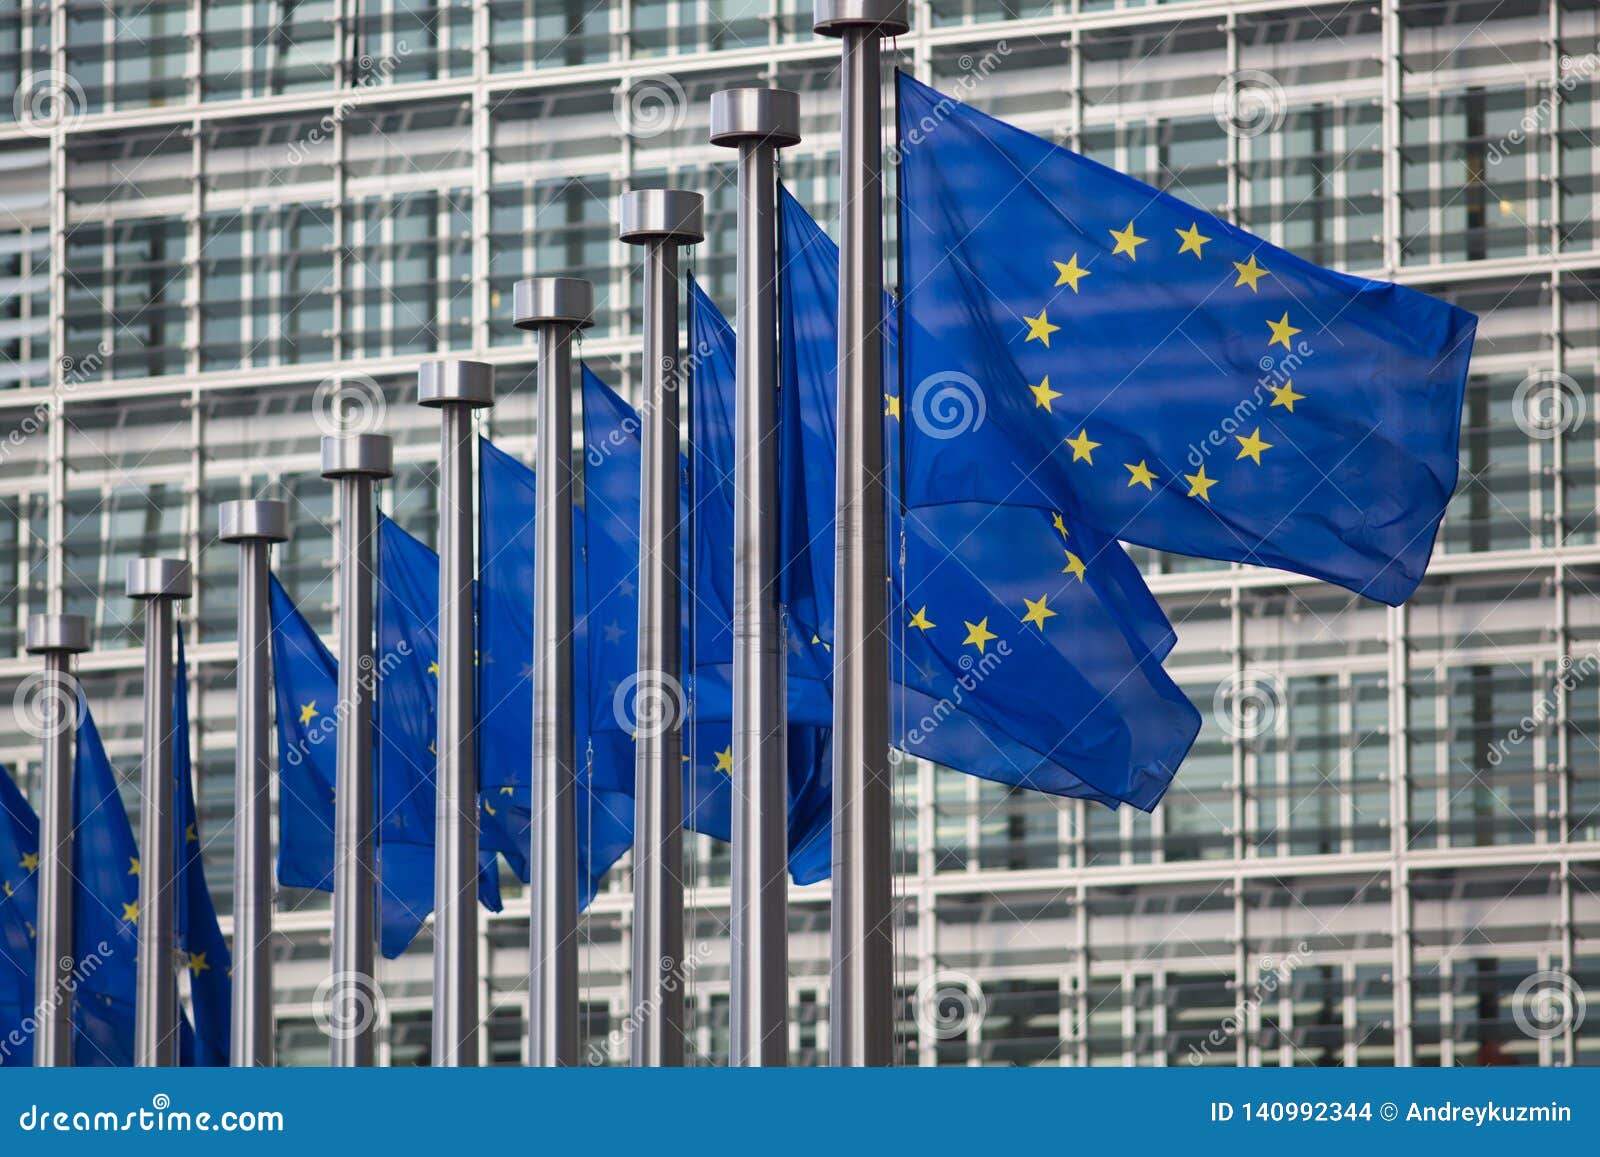 european union flags in front of berlaymont building, brussels, belgium